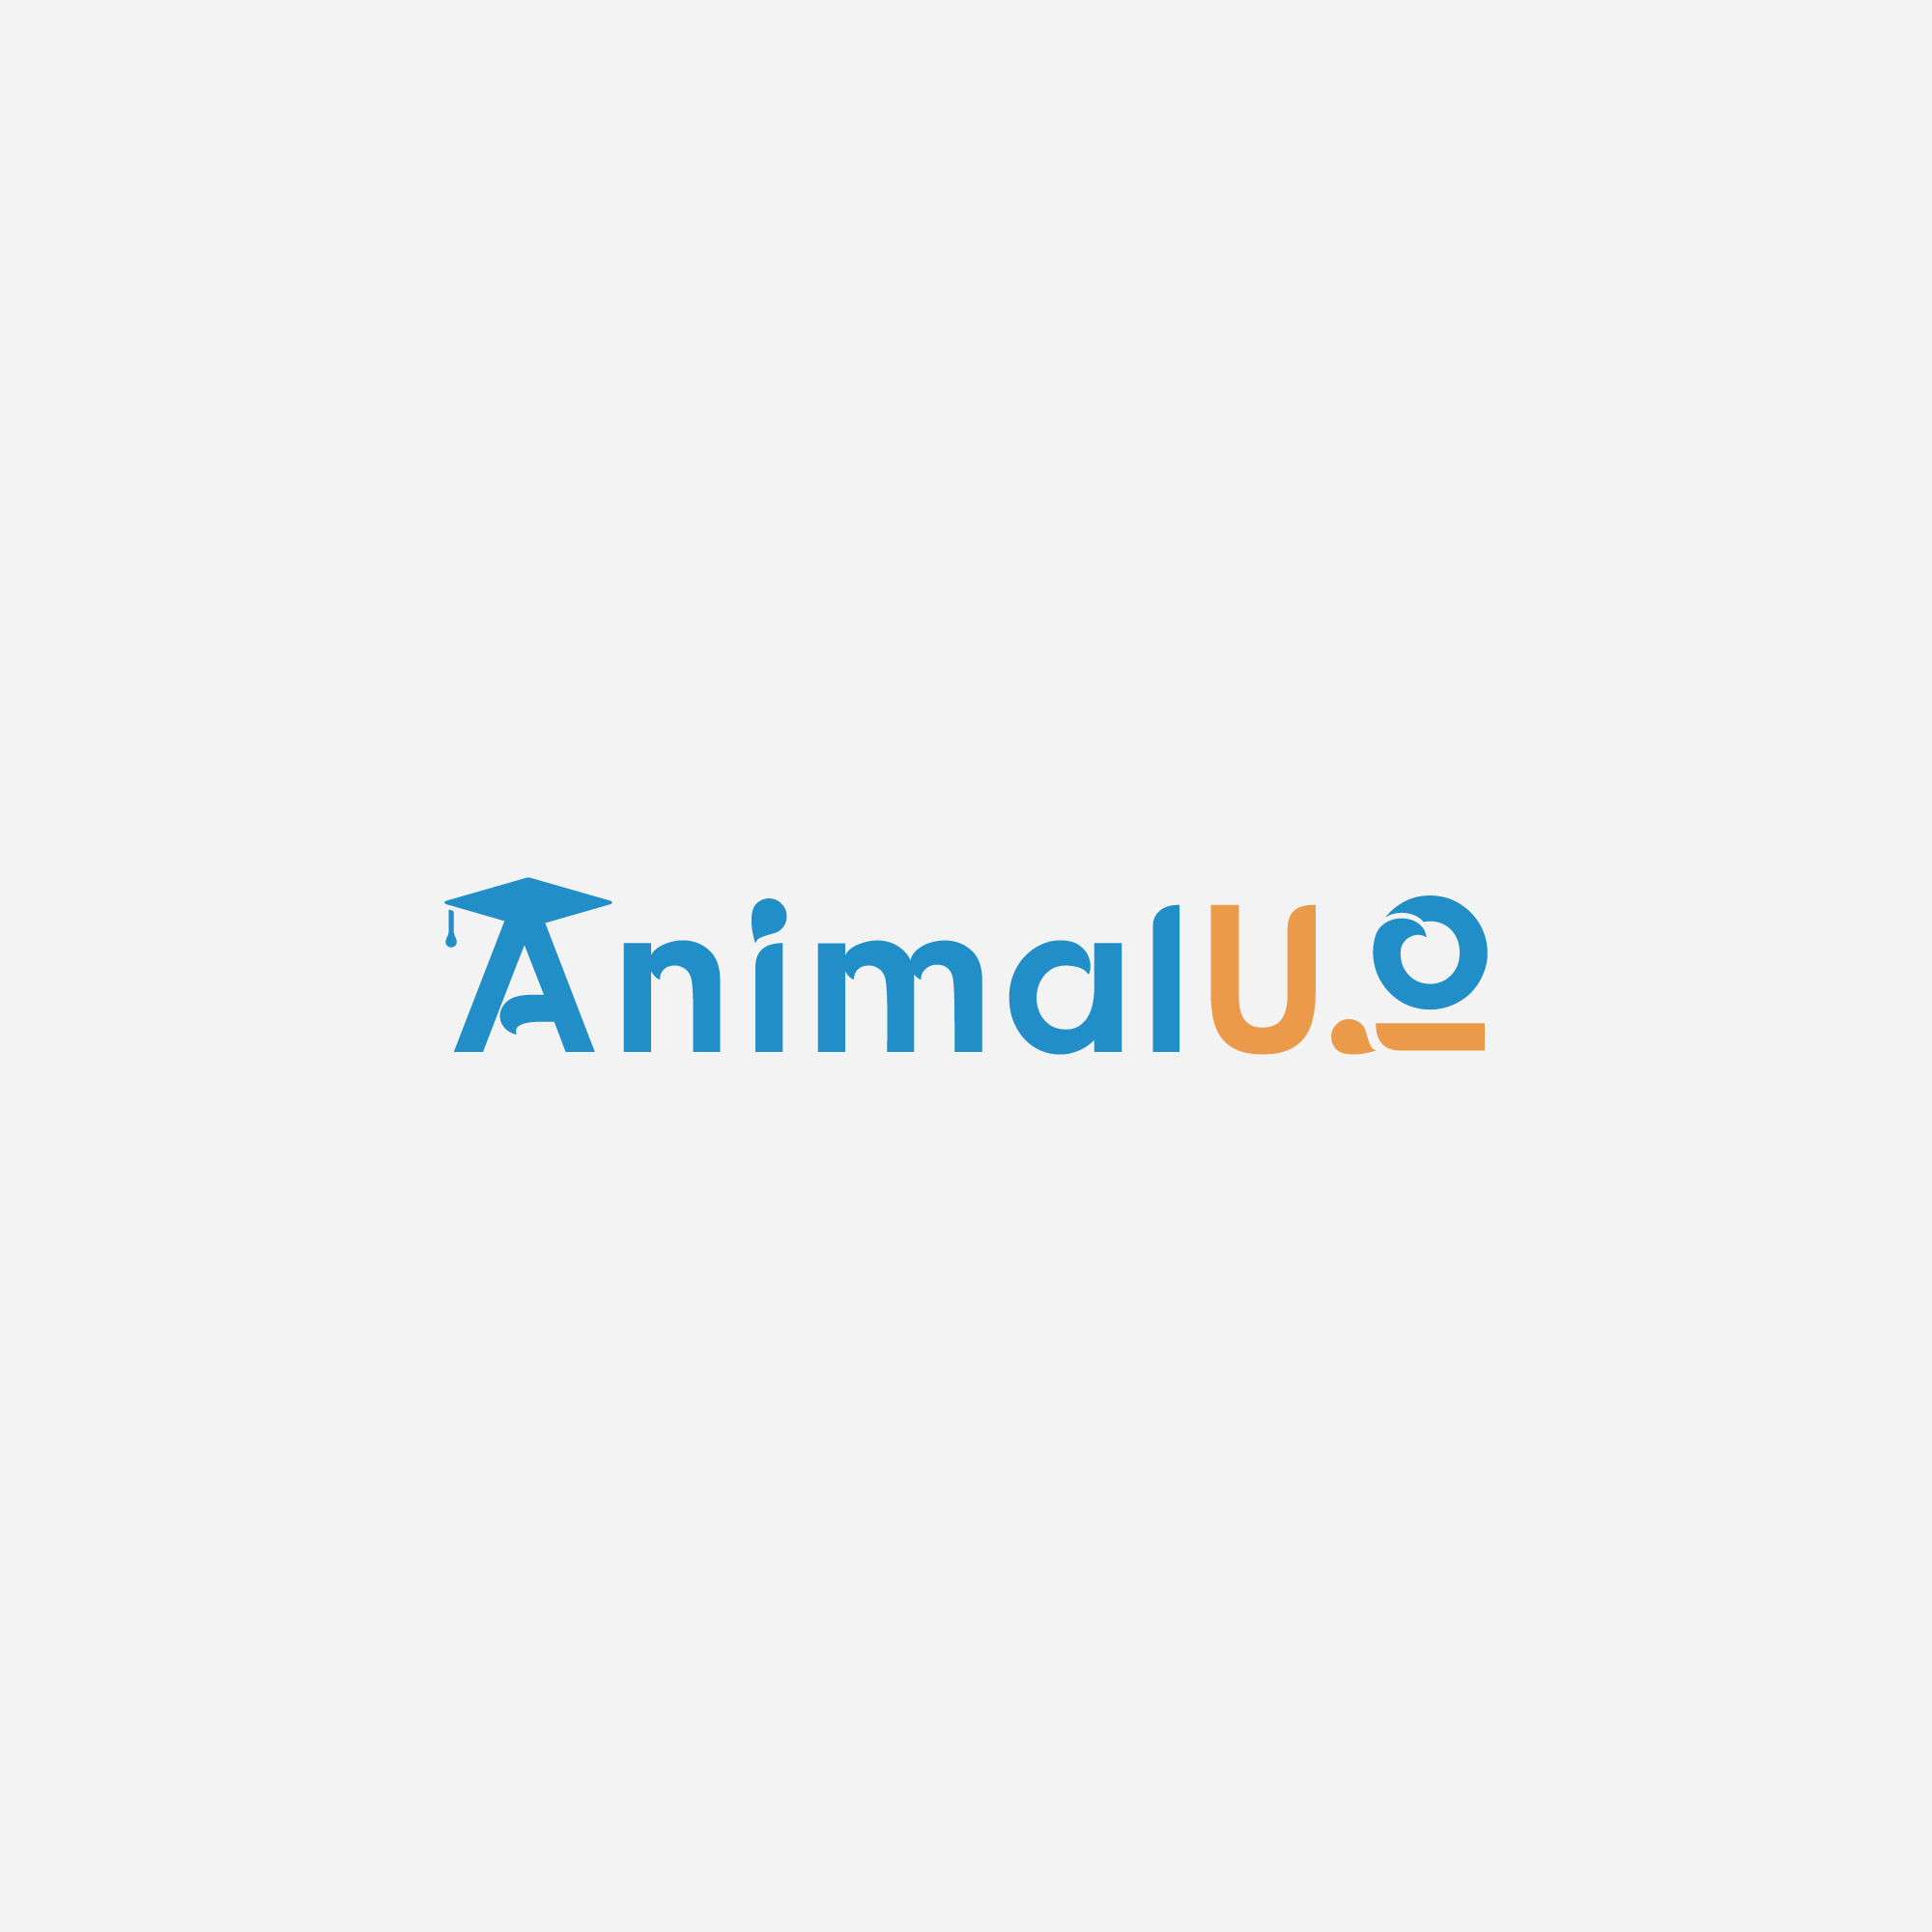 Animalu.io logo design brand